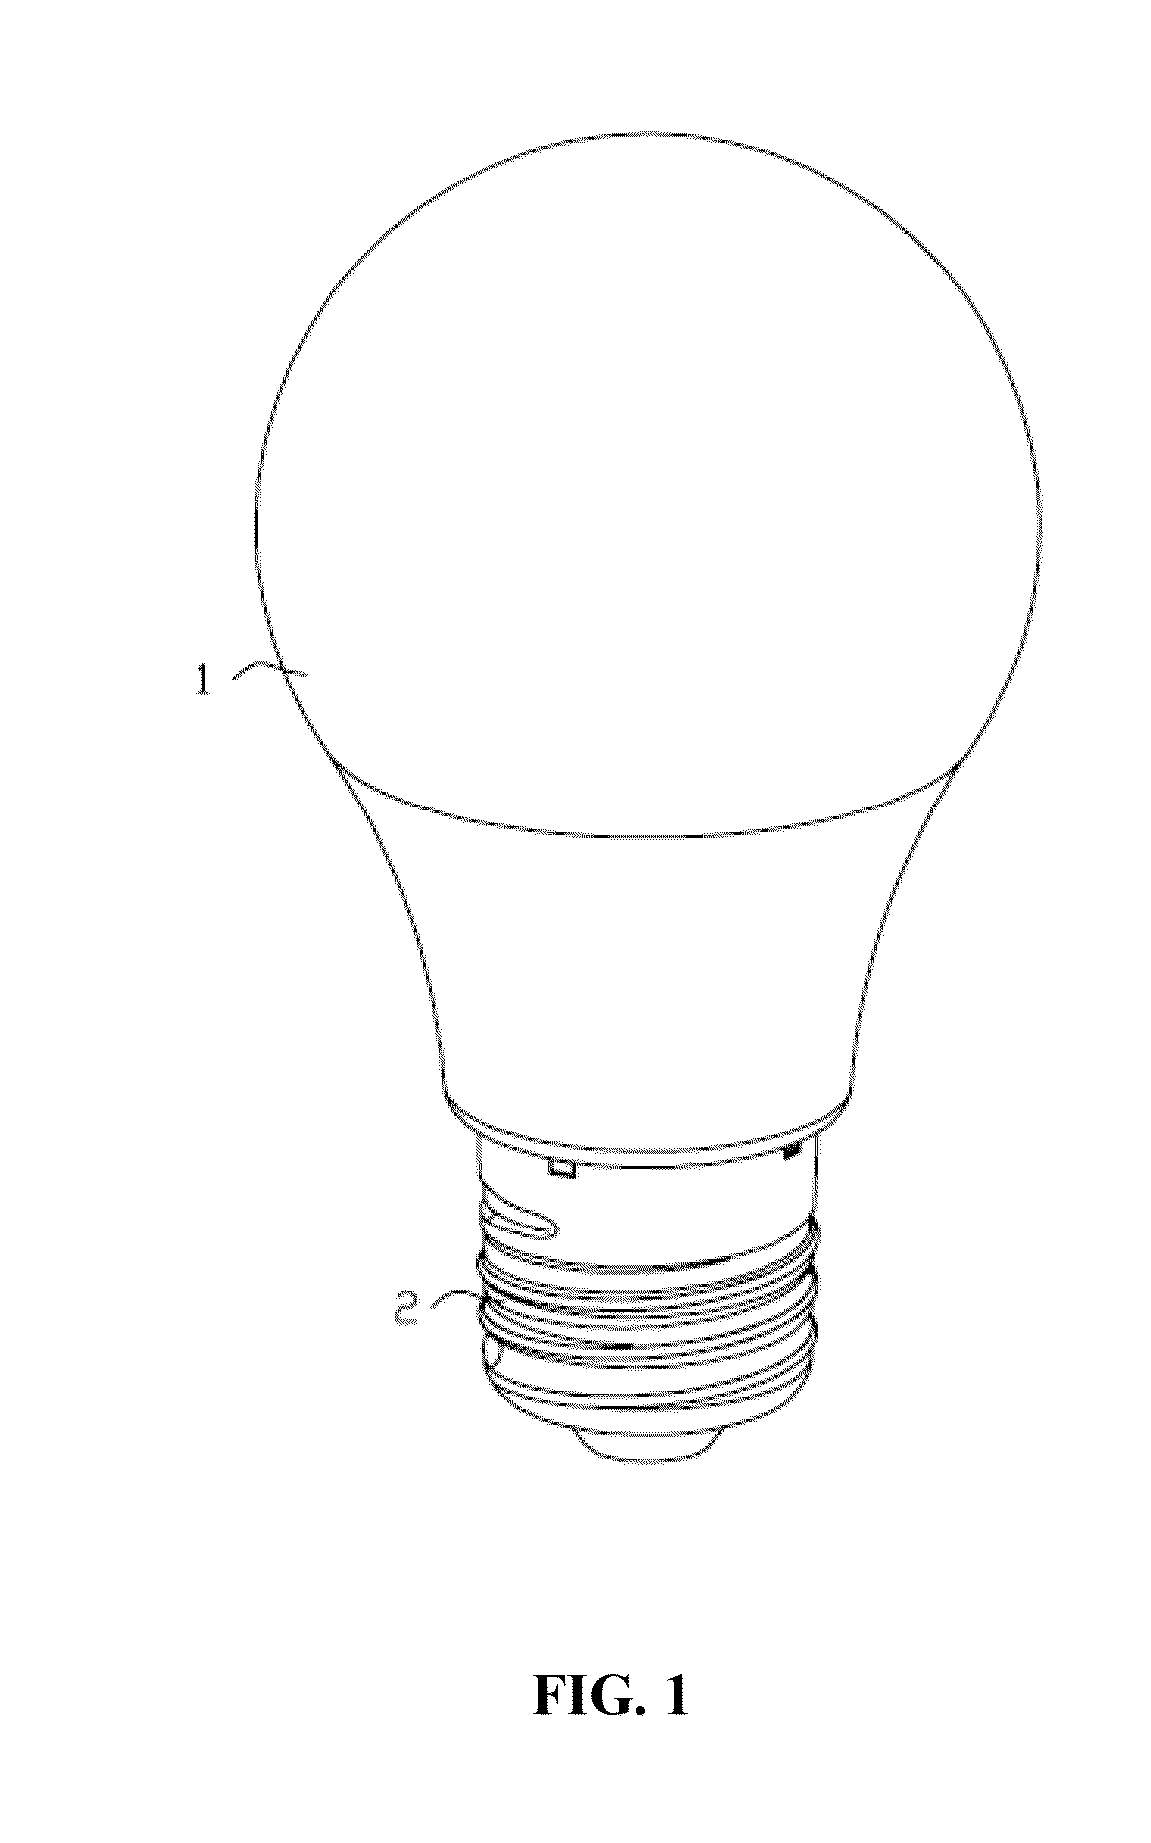 Light-emitting diode (LED) lamp bulb